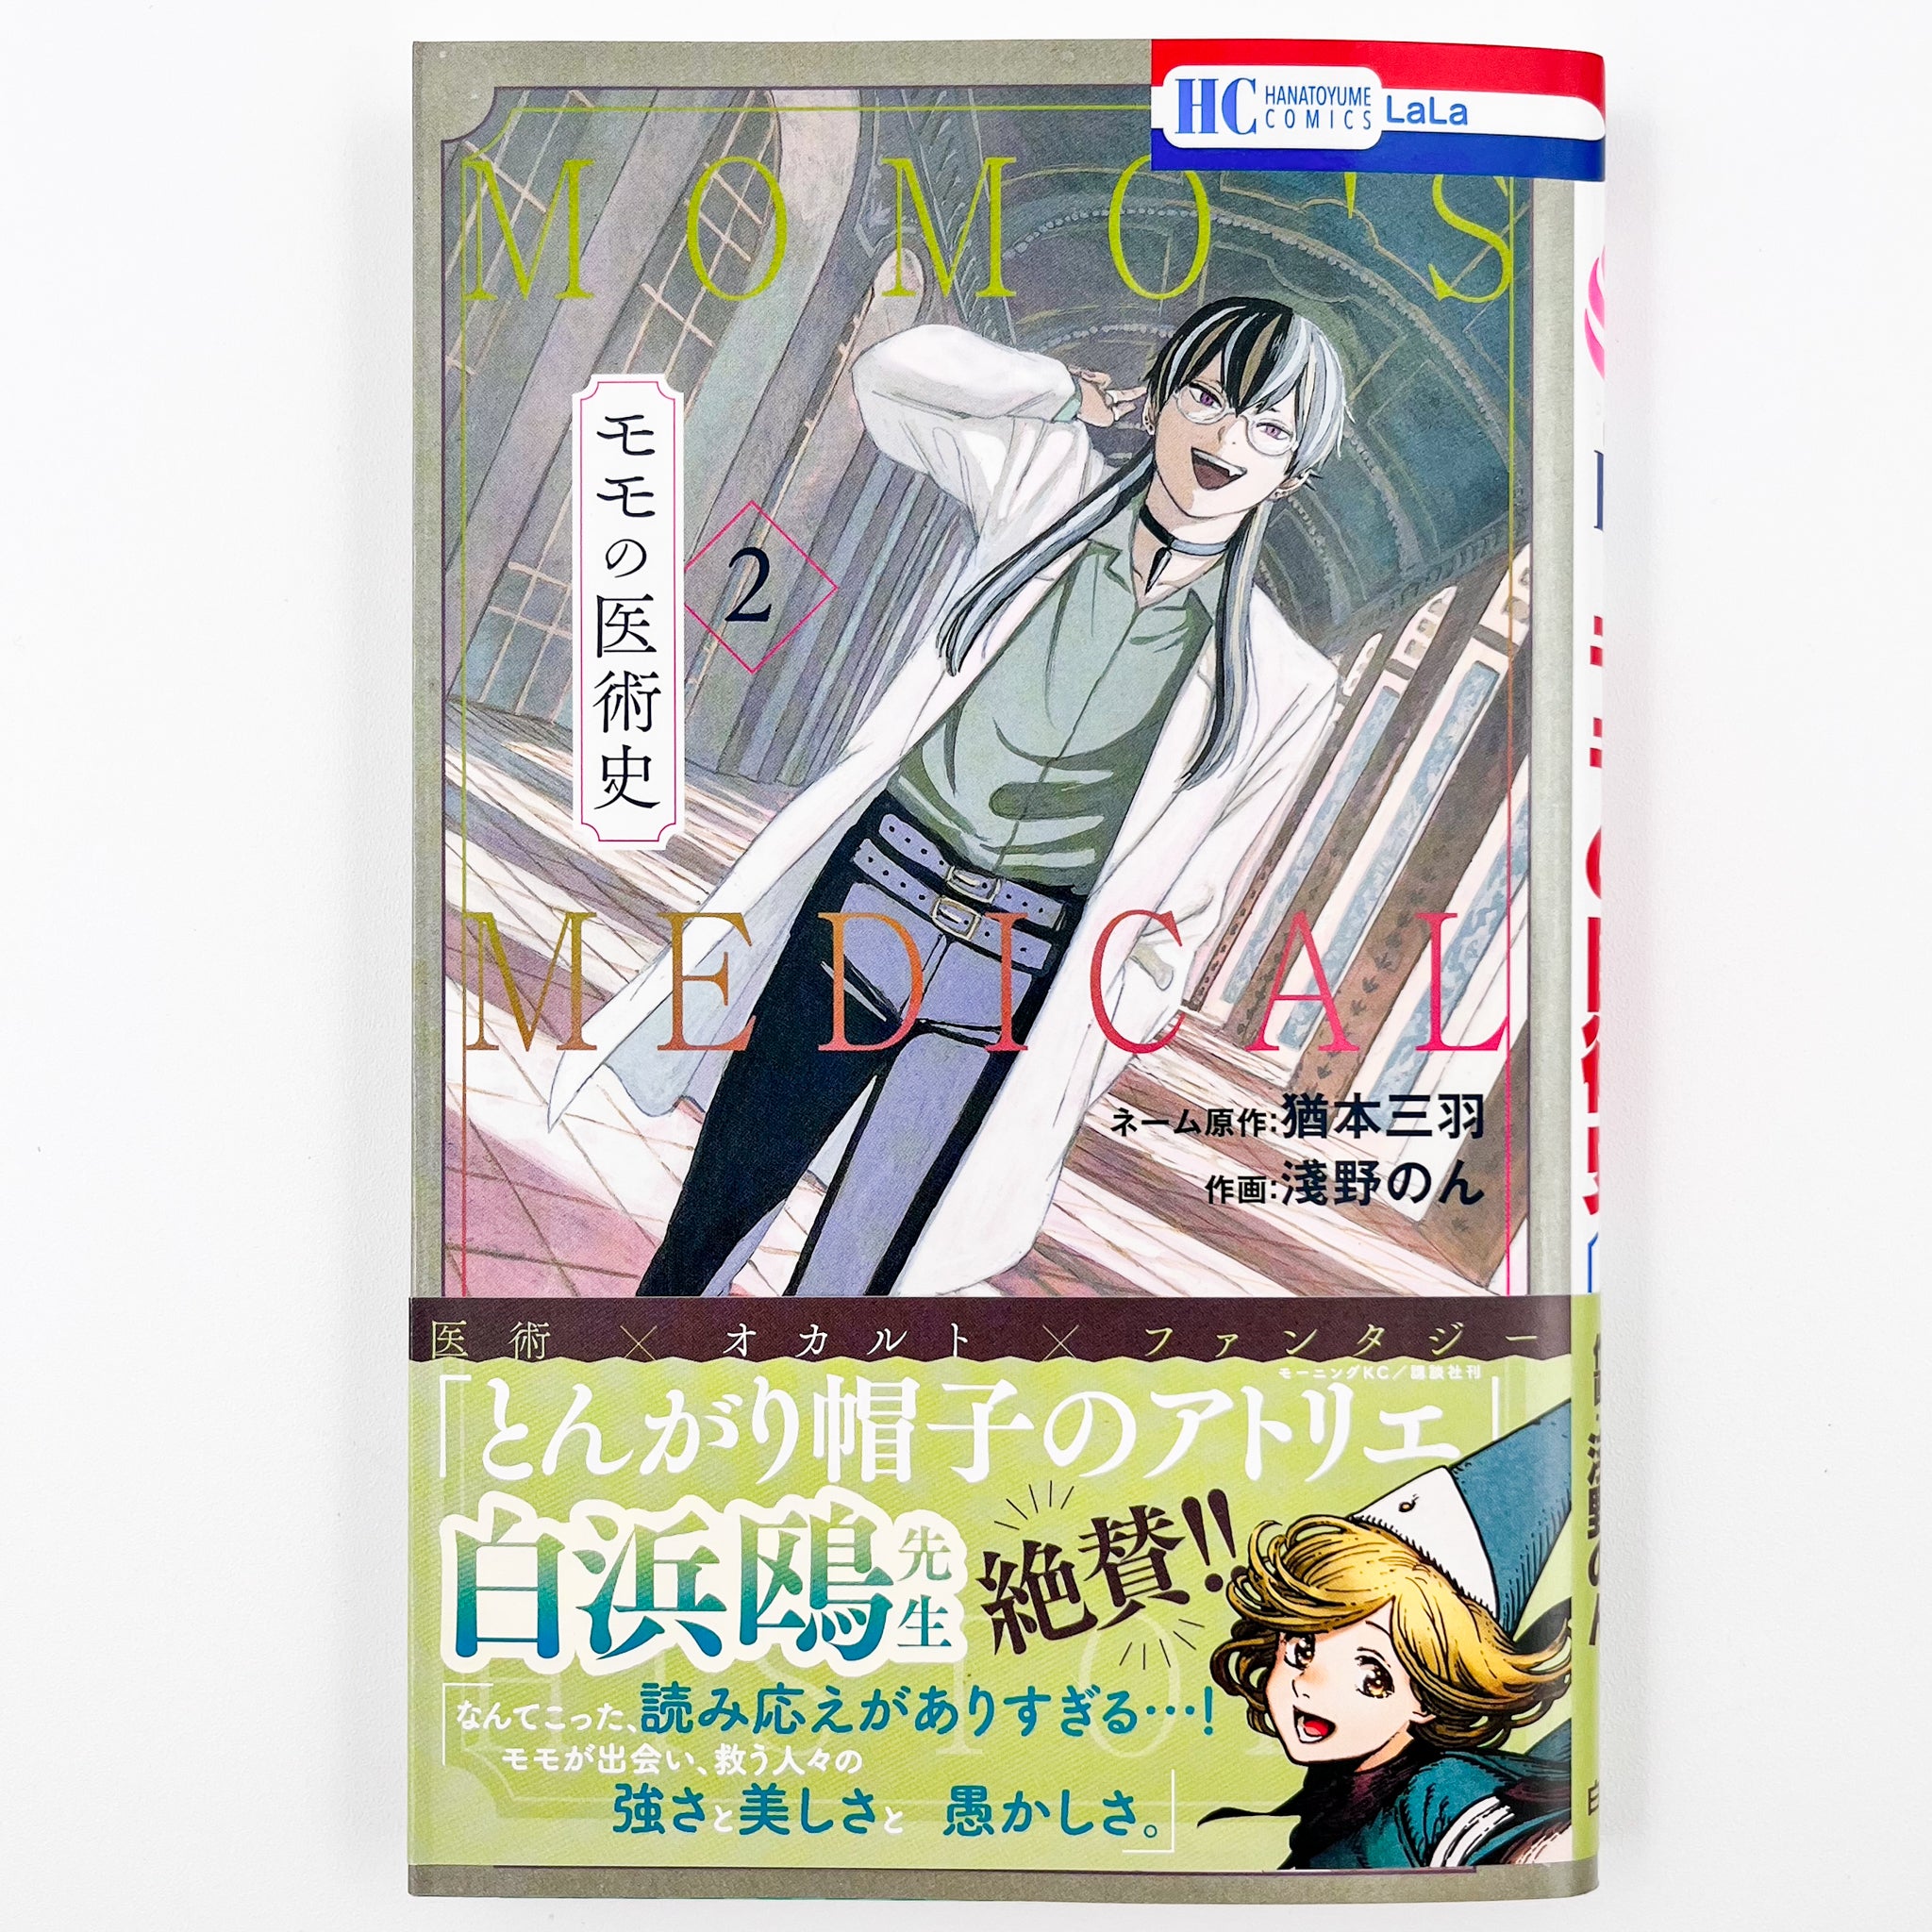 Momo no Ijutsushi volume 2 front cover with obi